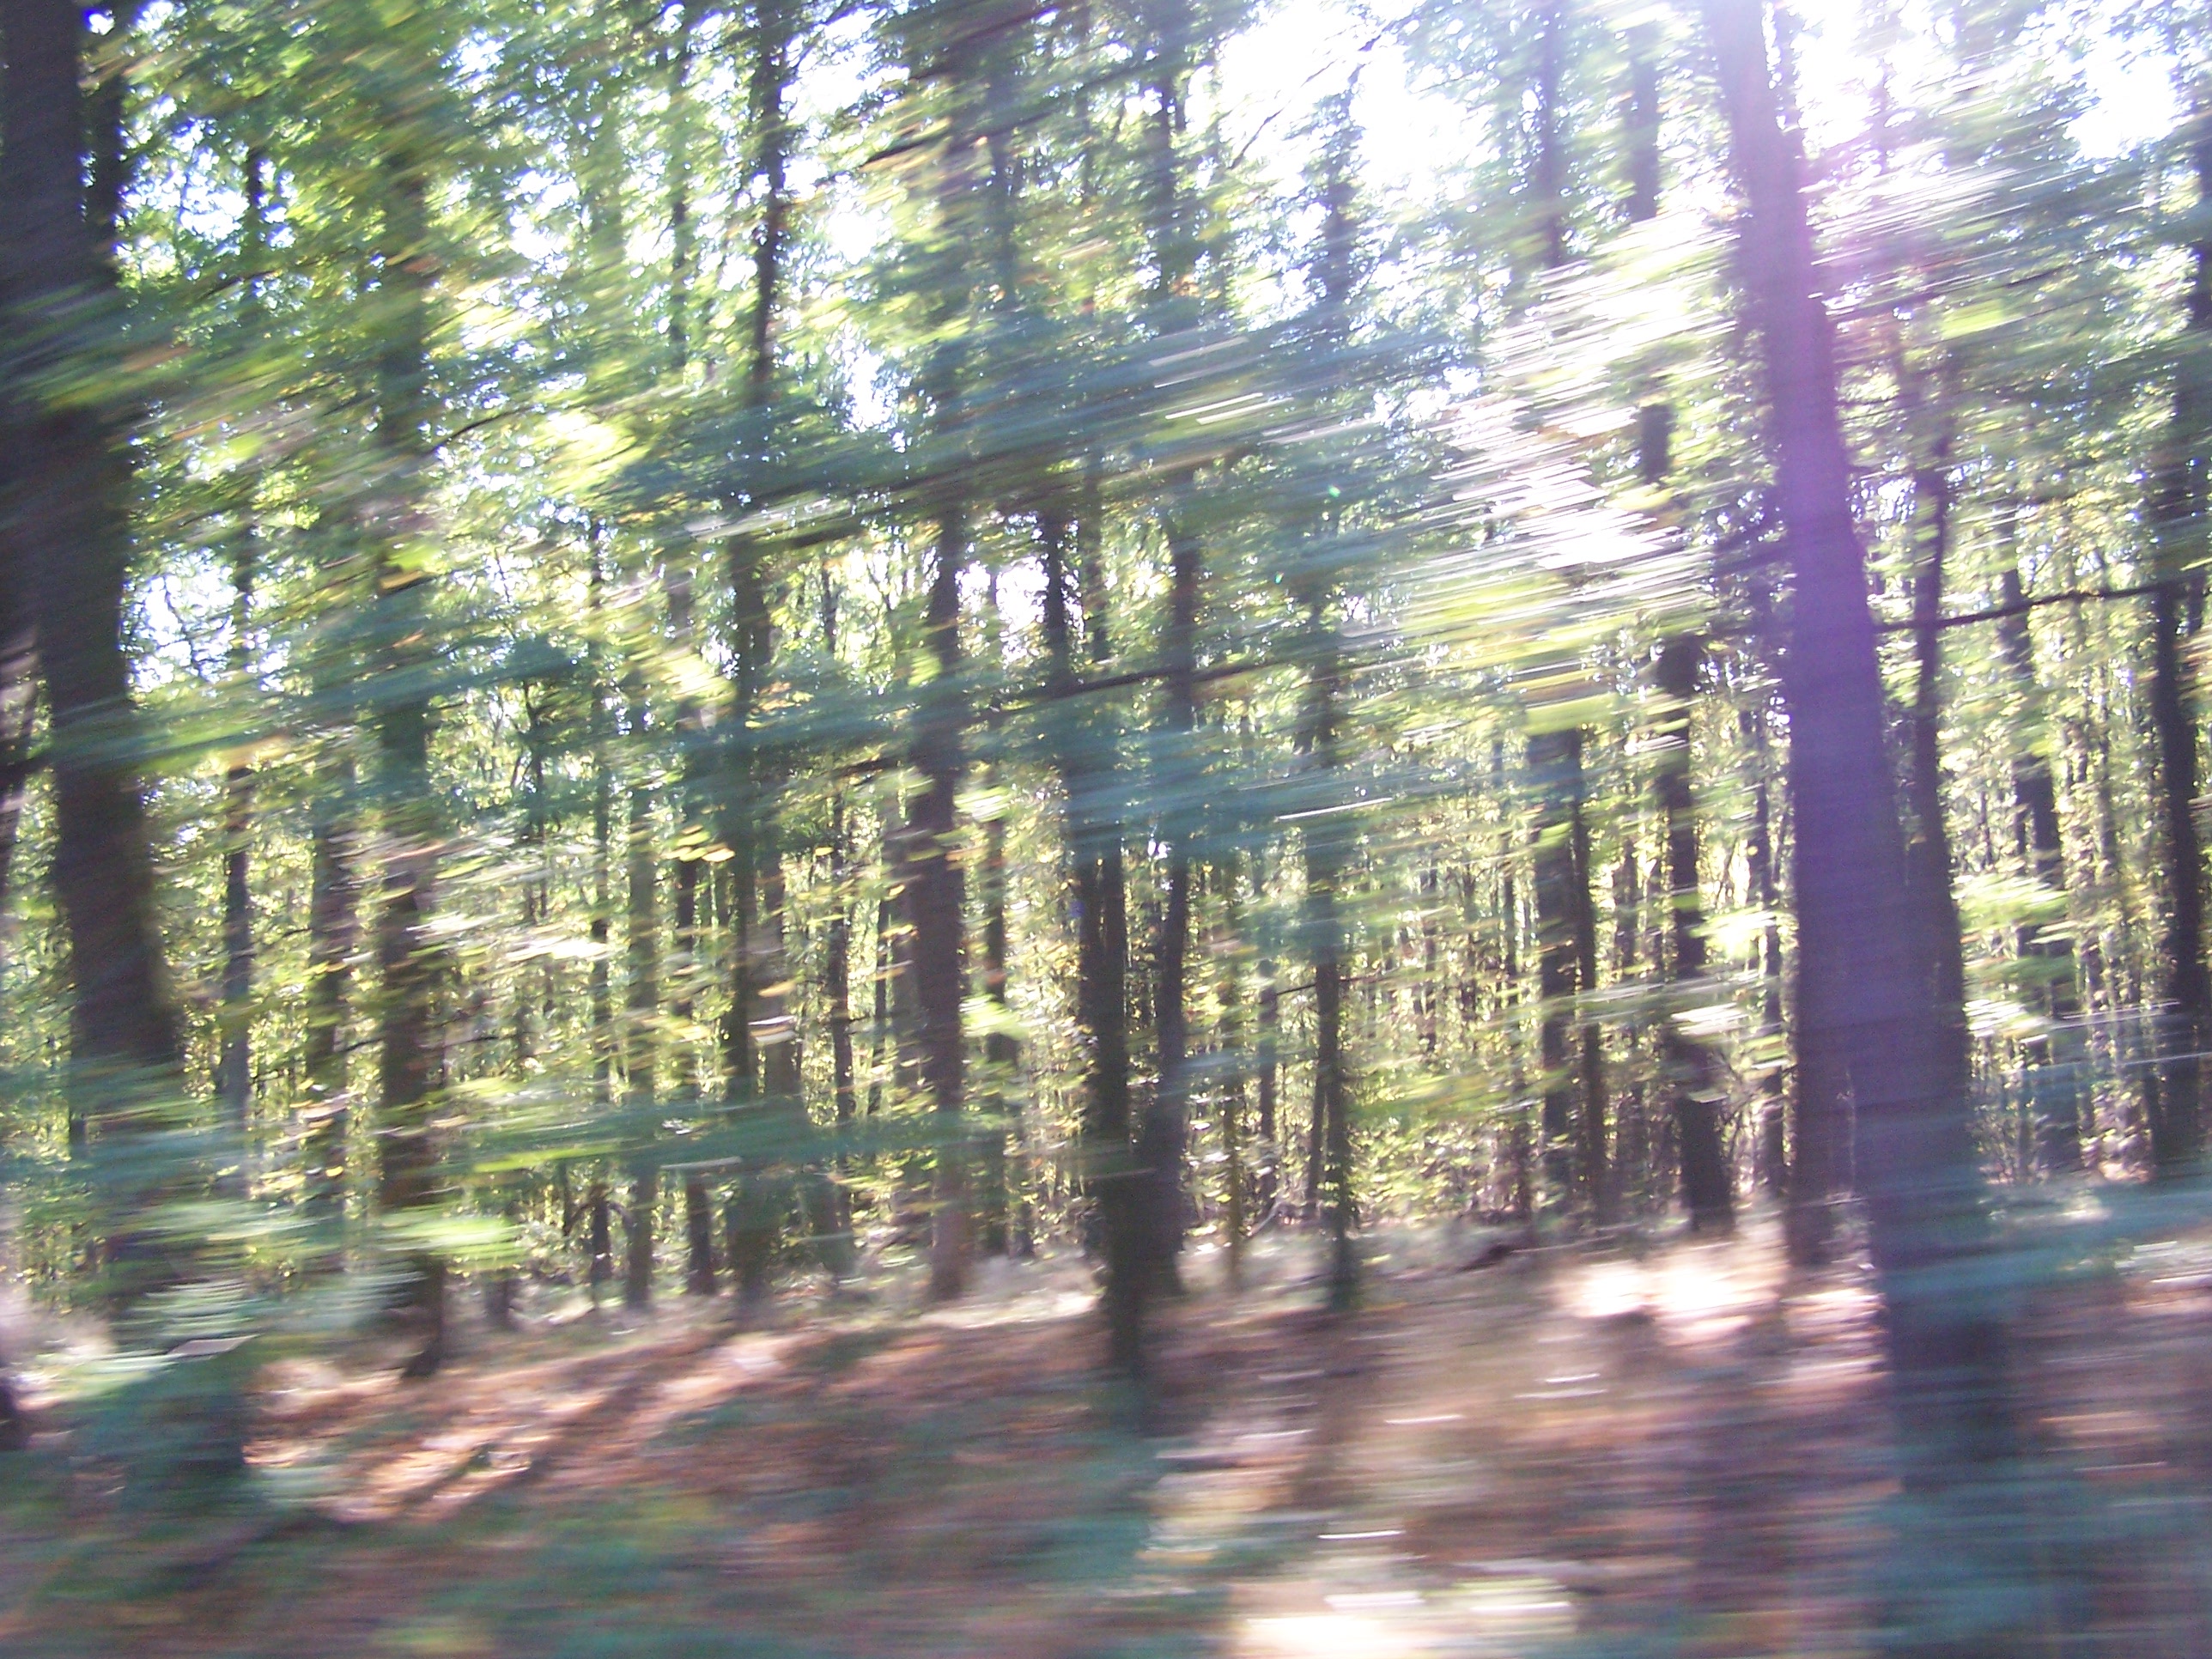 Les v pohybu 5